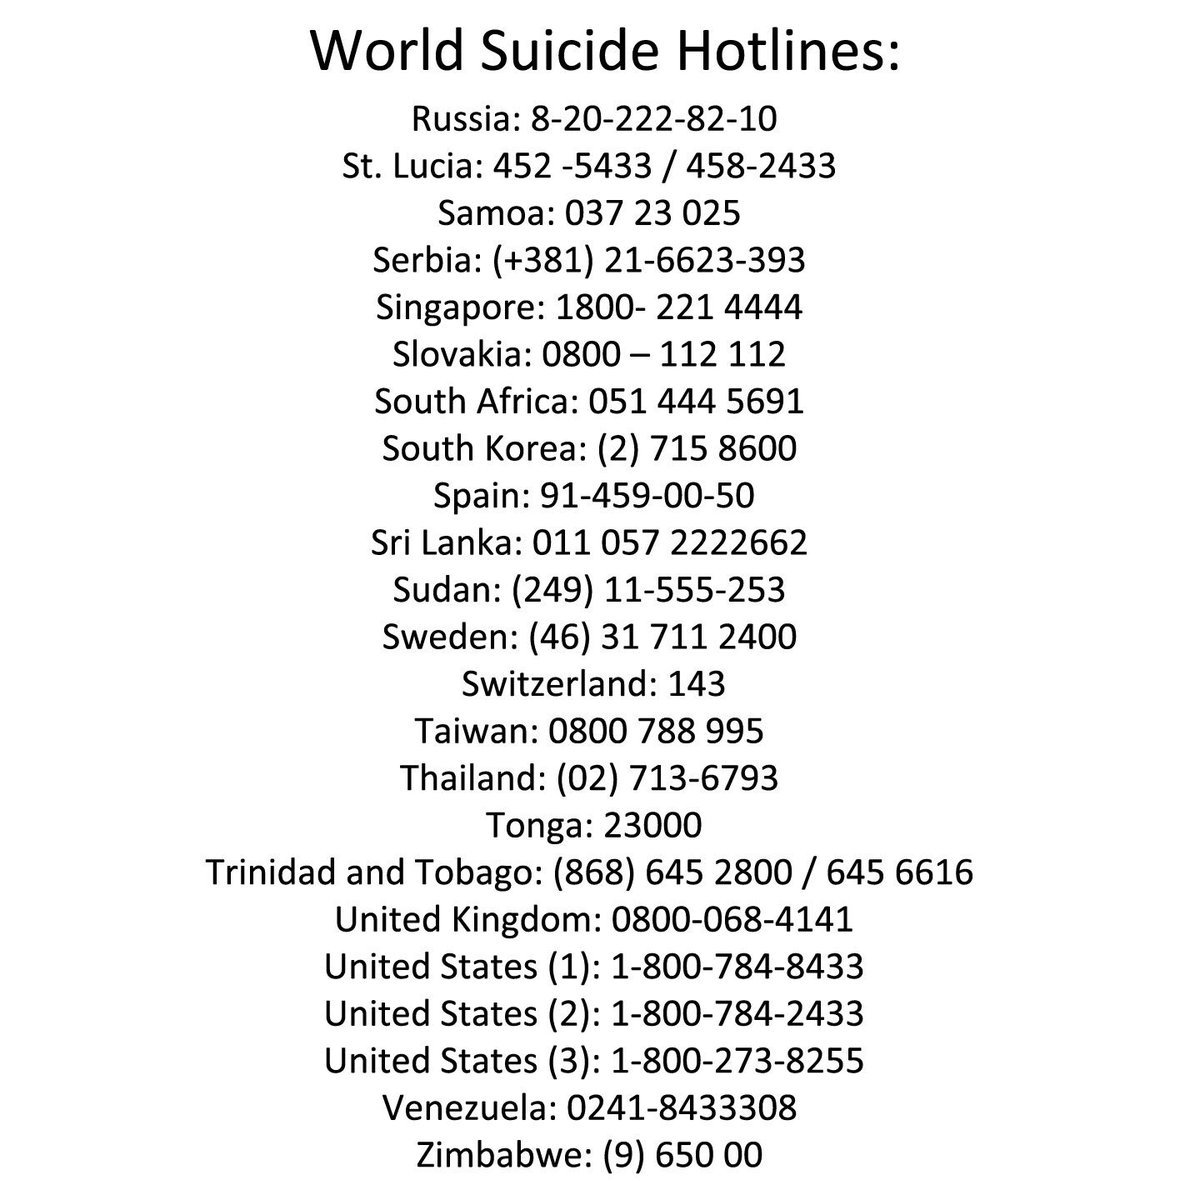 SUICIDE HOTLINES in case u need them